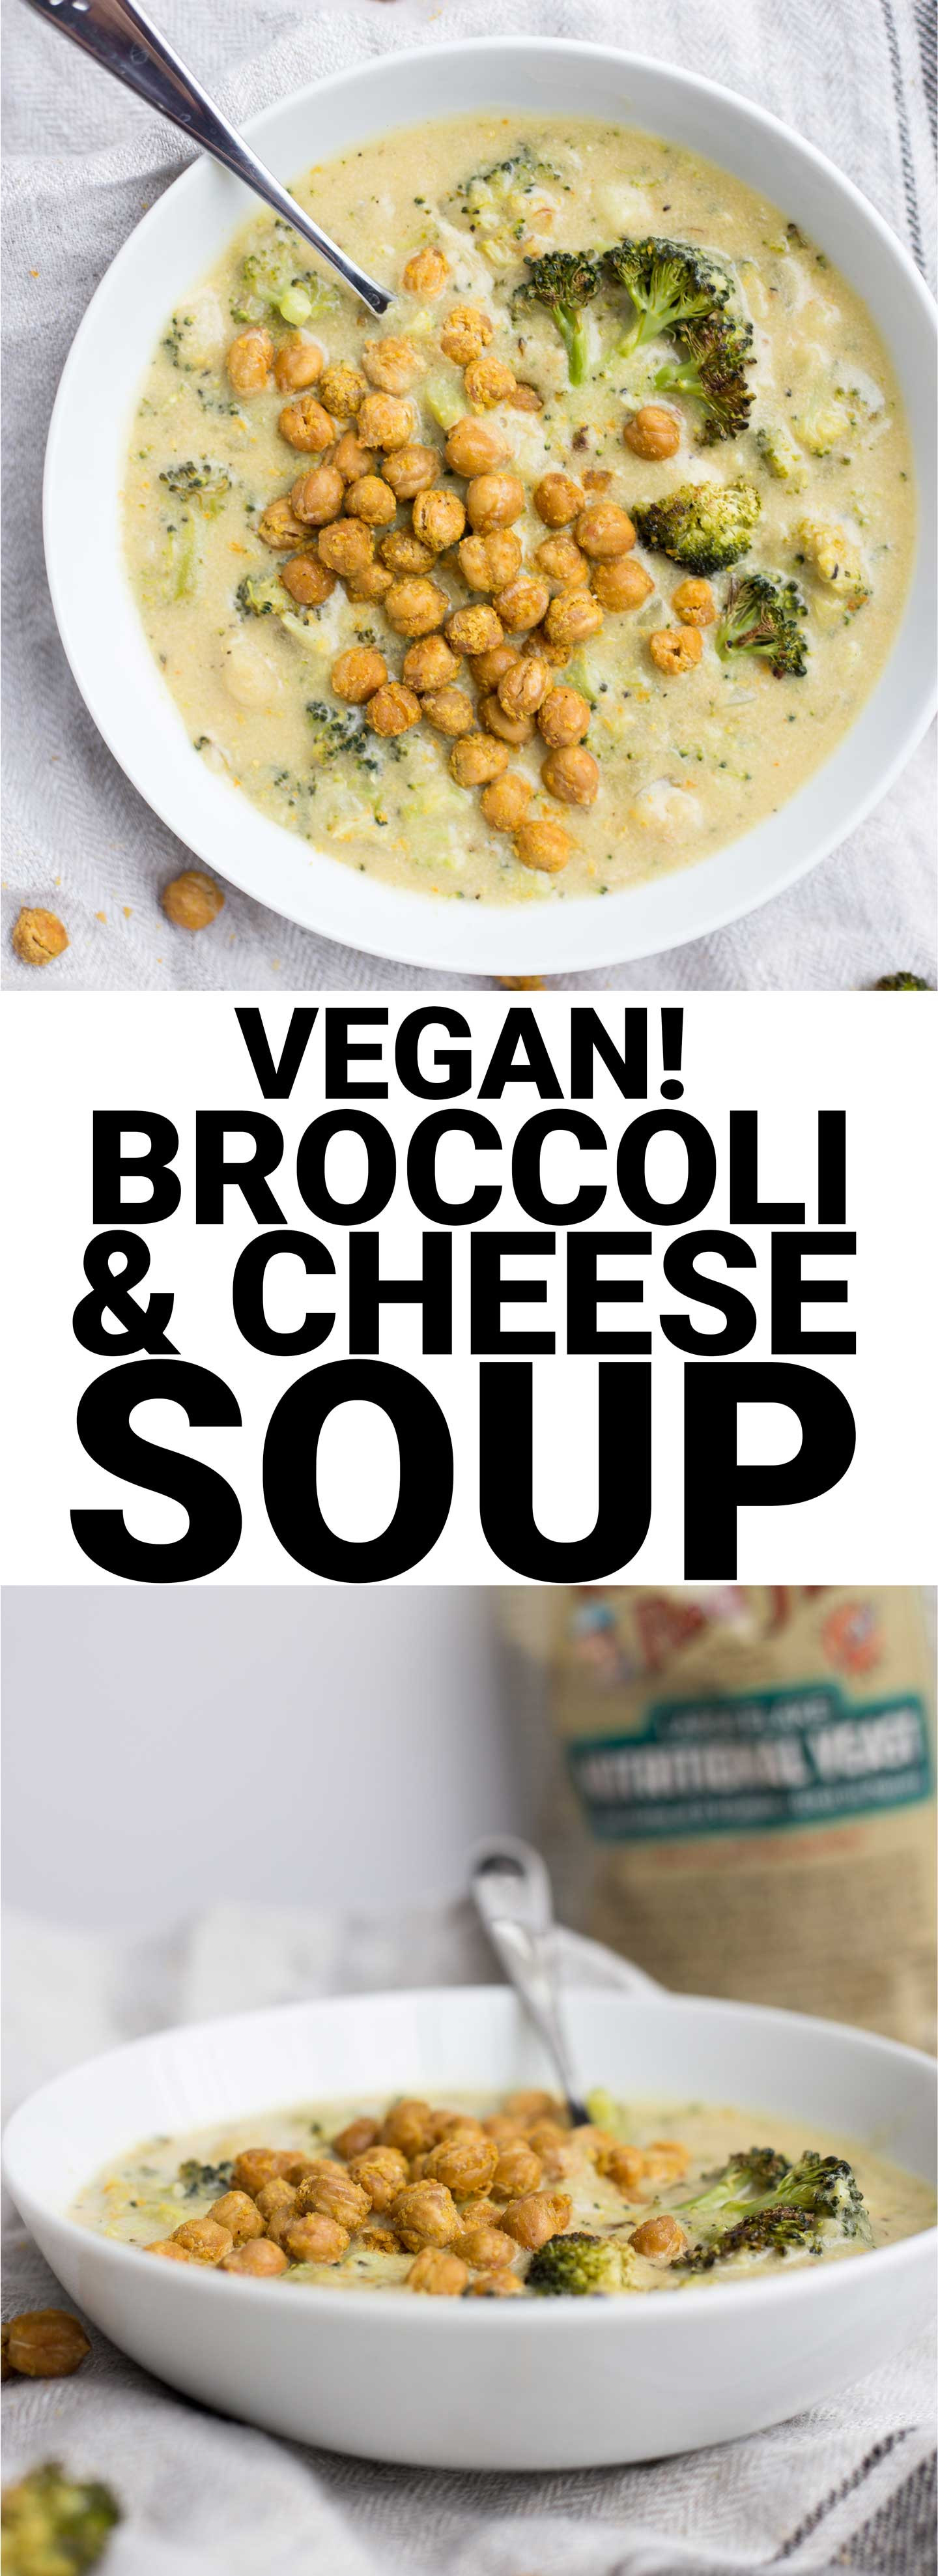 Vegan Broccoli Cheese Soup
 Vegan Roasted Broccoli & Cheese Soup Fooduzzi